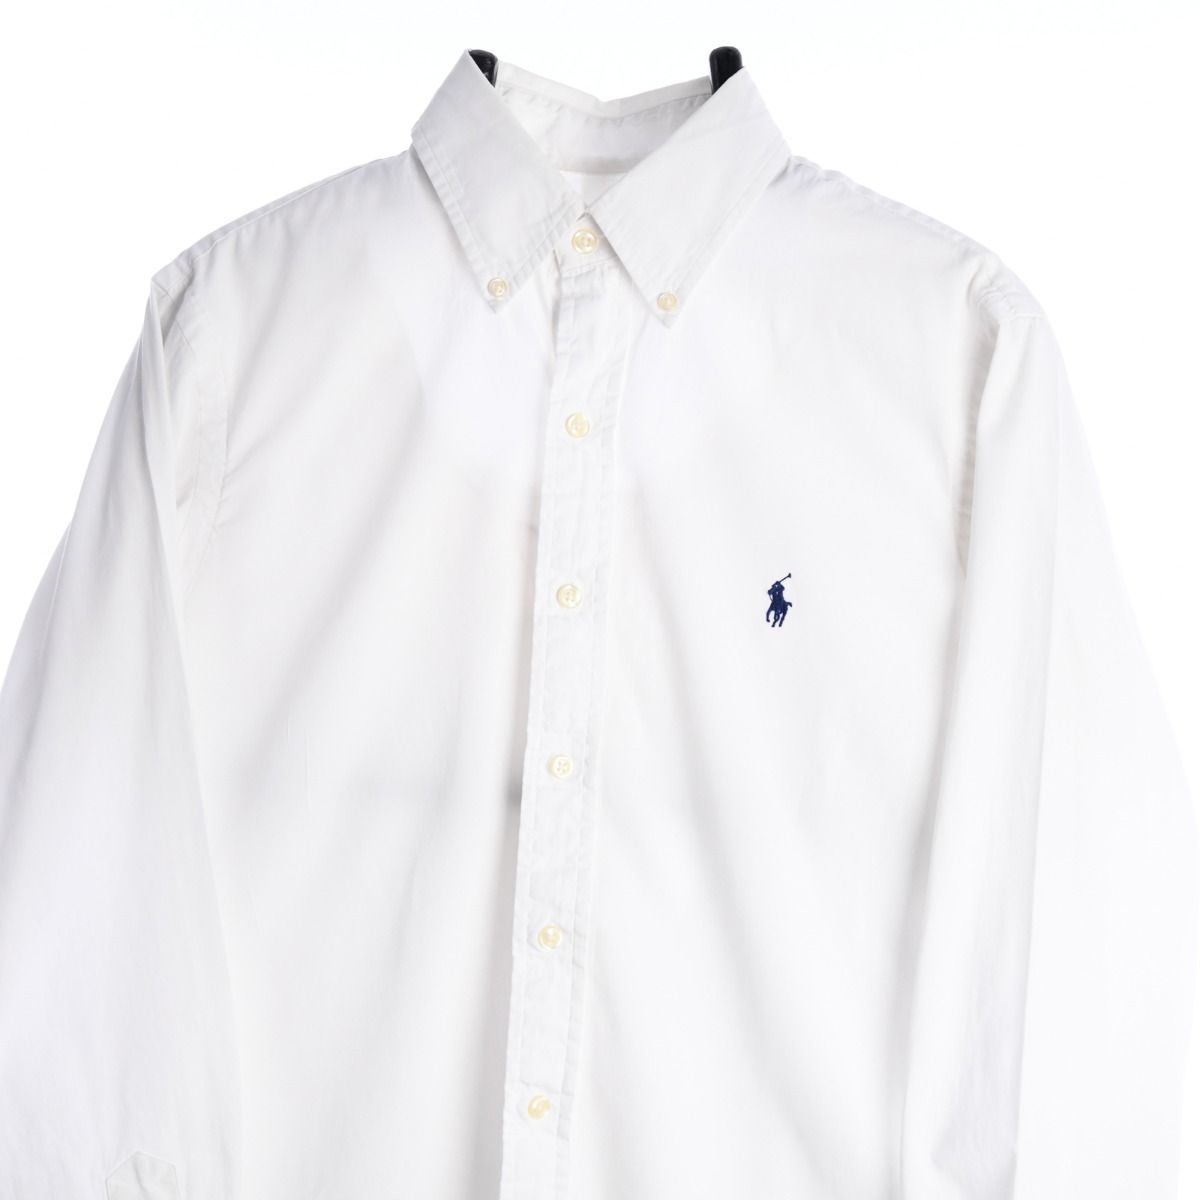 Ralph Lauren White Shirt